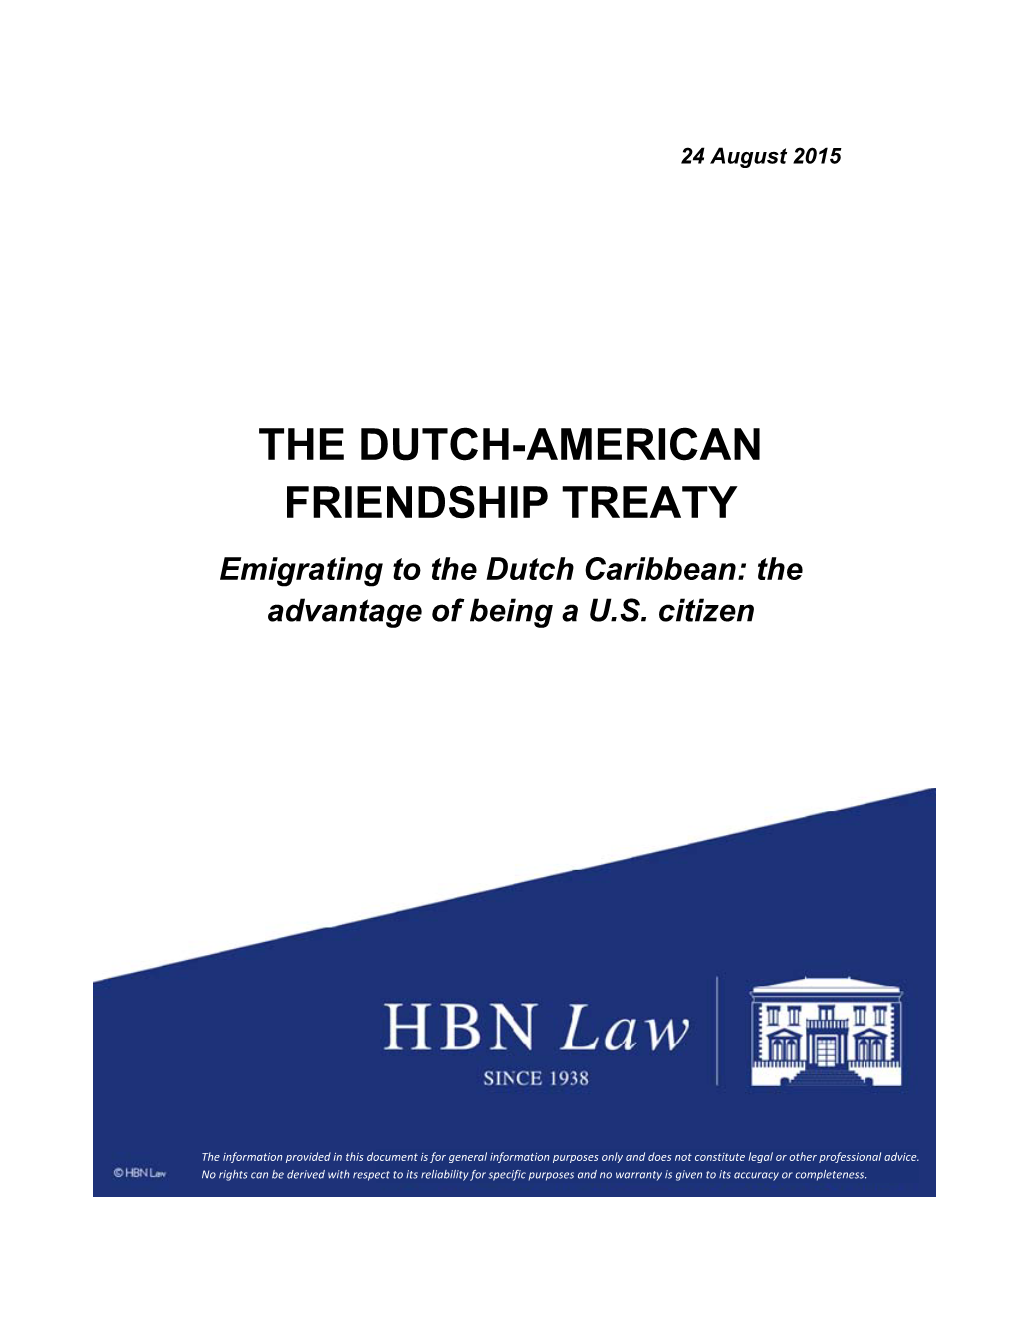 THE DUTCH-AMERICAN FRIENDSHIP TREATY Emigrating to the Dutch Caribbean: The